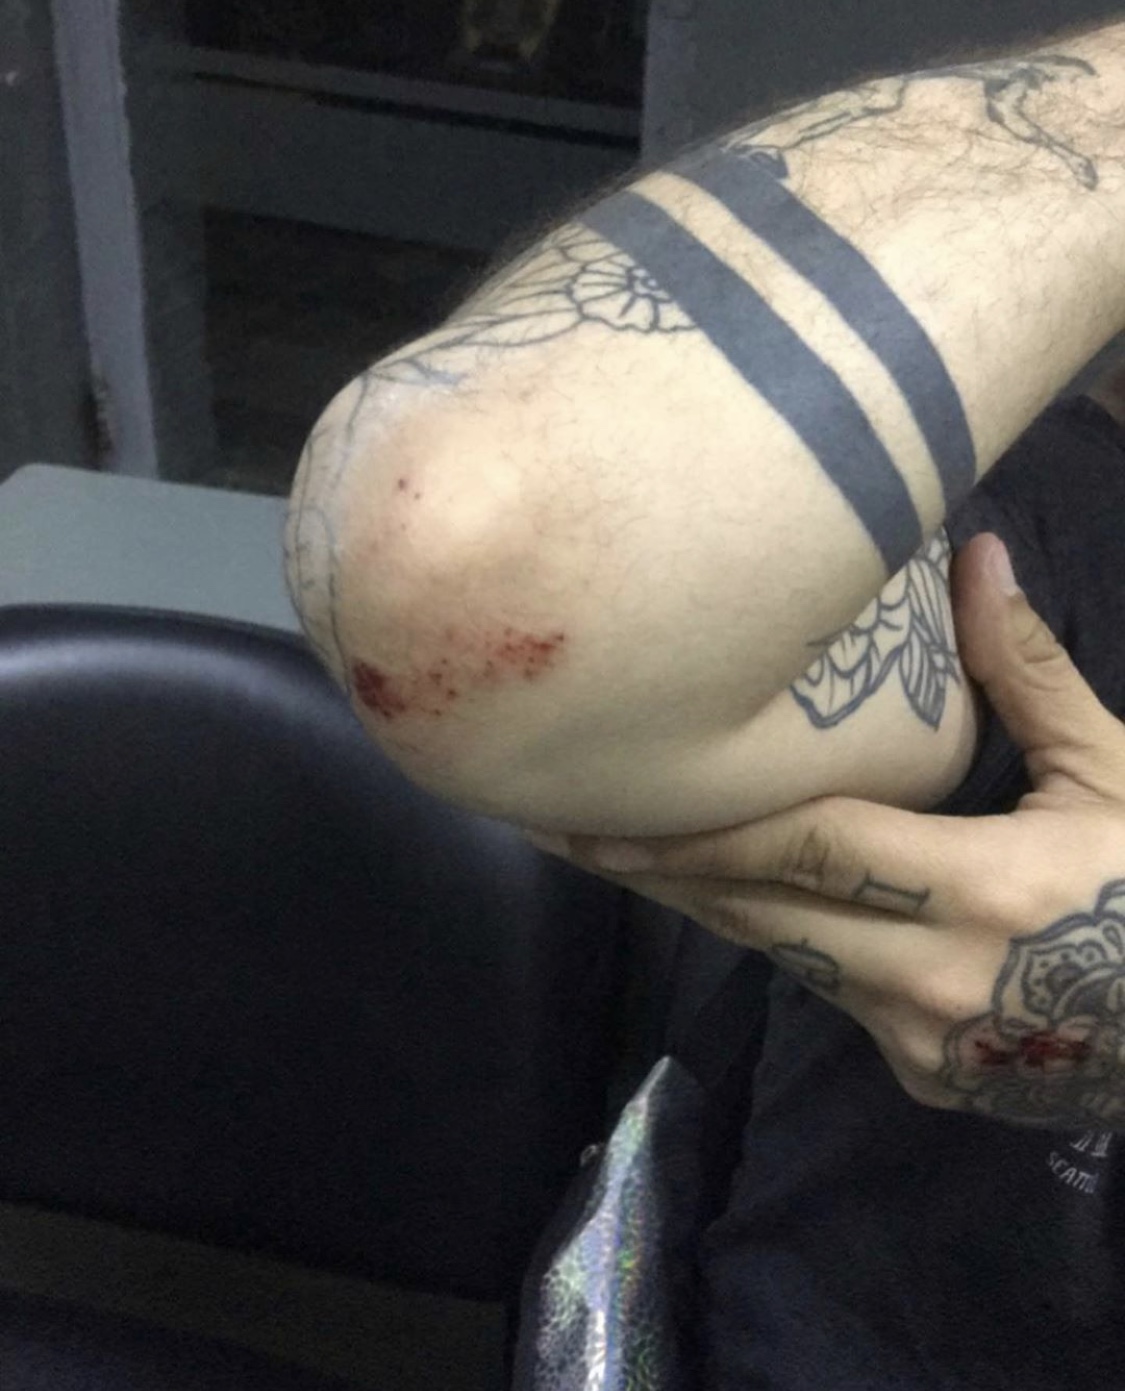 Cristian Jacobsen subió un video a Instagram mostrando las heridas del ataque.